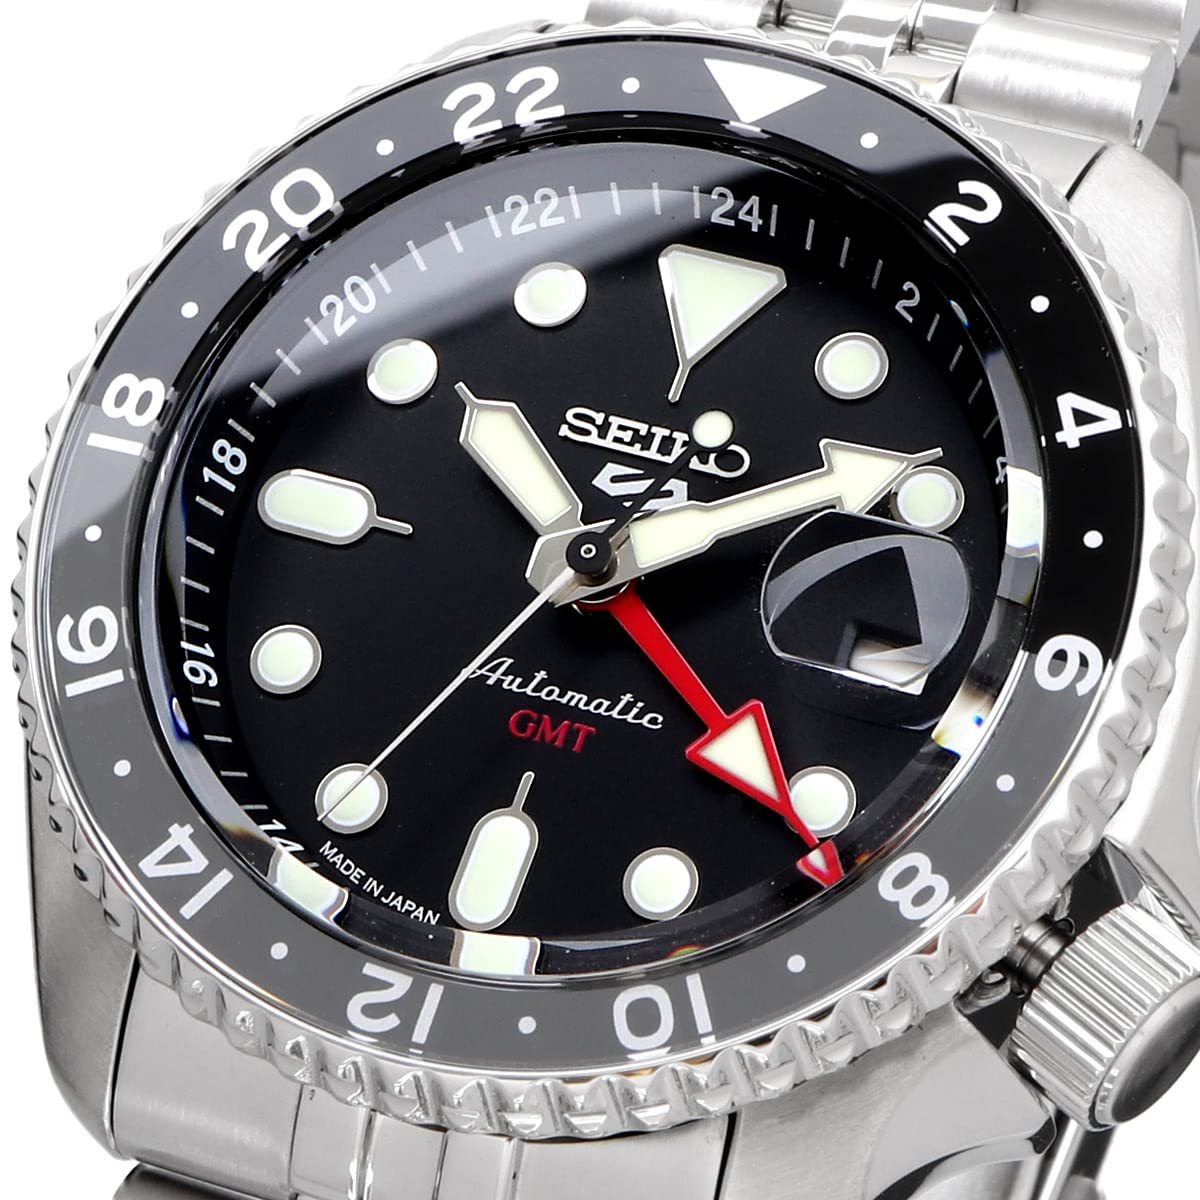 Seiko 5 Sports Style GMT Model, Automatic Mechanical Watch, Seiko Five Sports, Men's Made in Japan SSK001, Black, Overseas Model, Bracelet Type